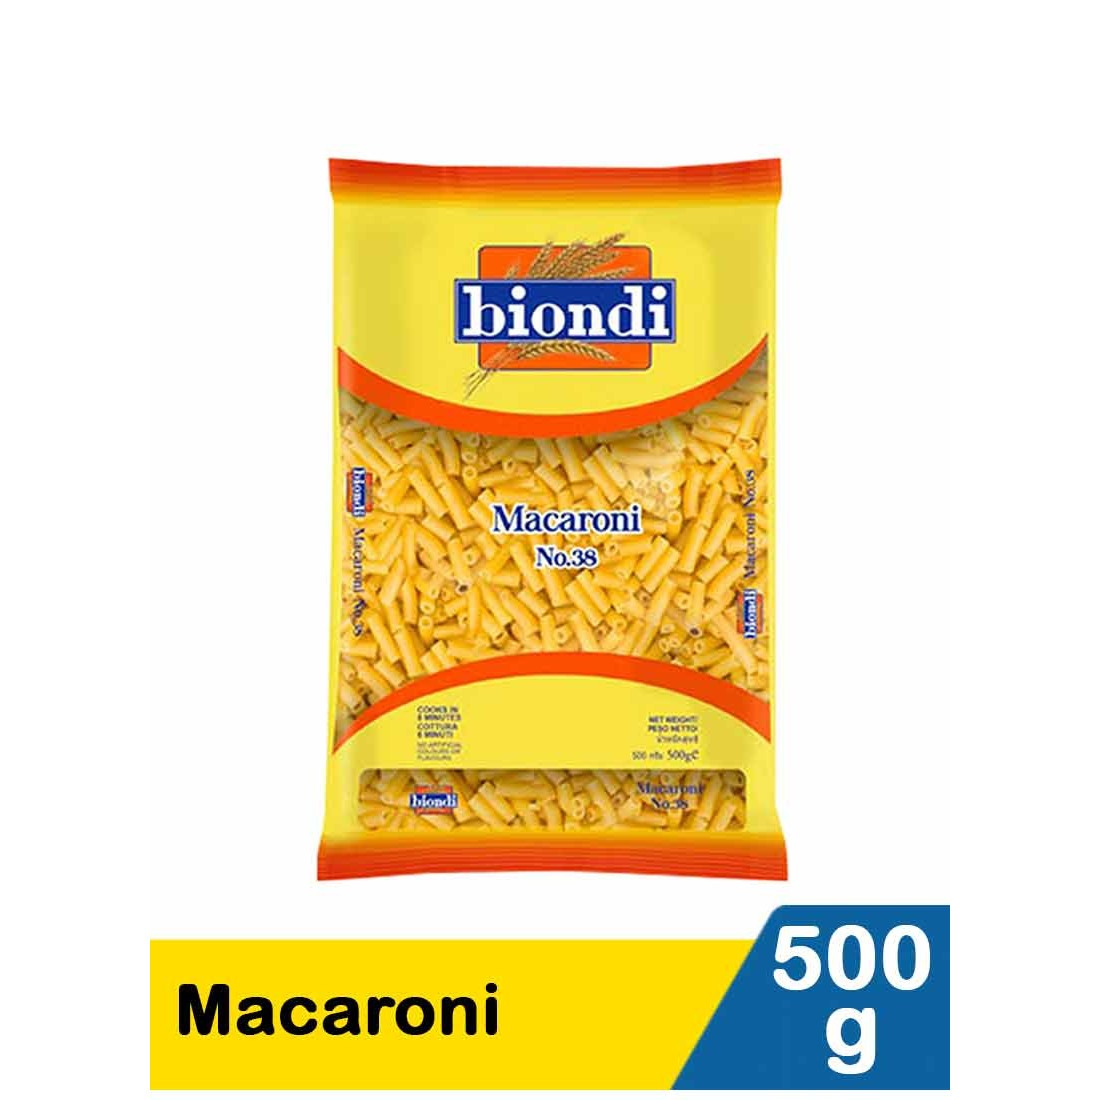 Biondi 500G Macaroni No.38